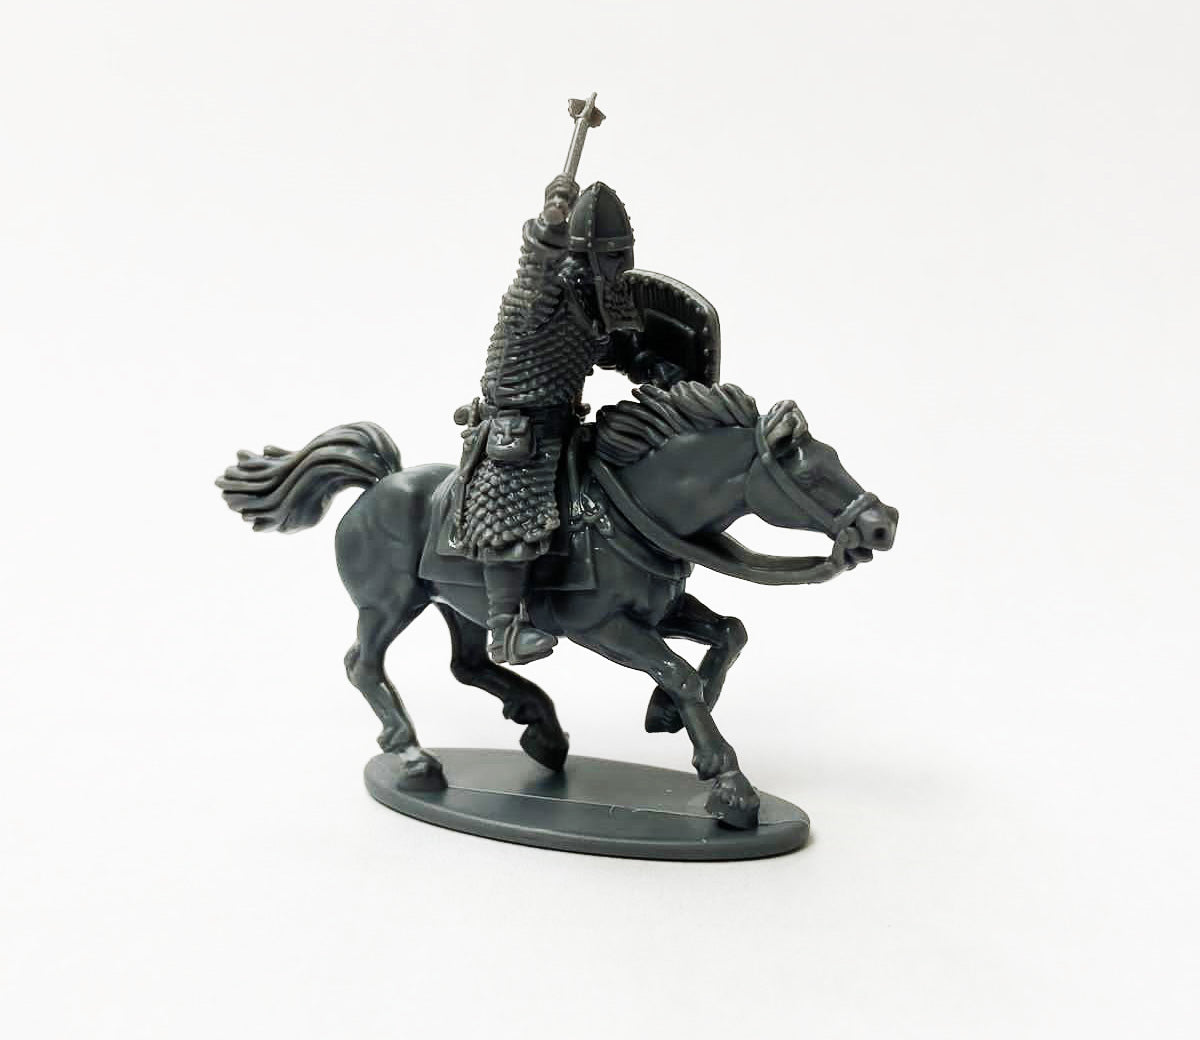 Norman Cavalry